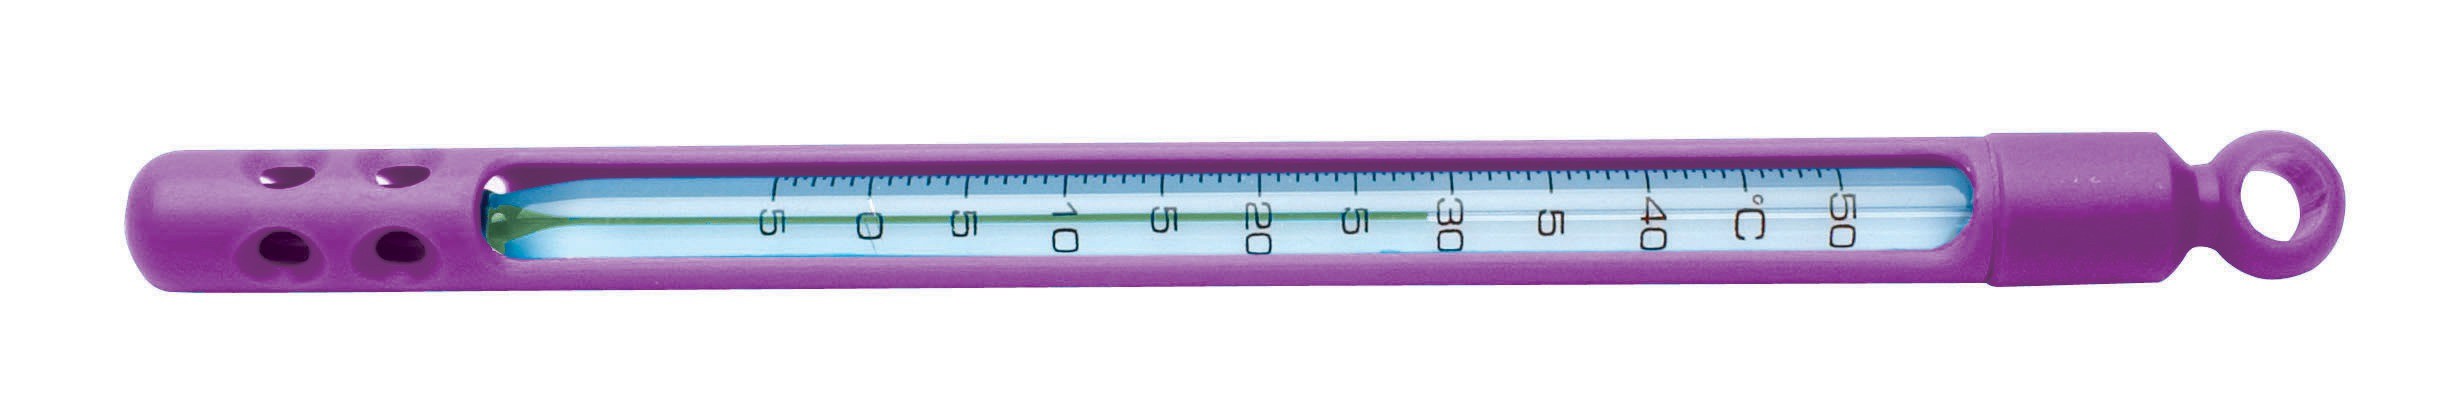 SP Bel-Art, H-B DURAC Plus Pocket Liquid-In-Glass Laboratory Thermometer; -5 to 50C, Window Plastic Case, Organic Liquid Fill